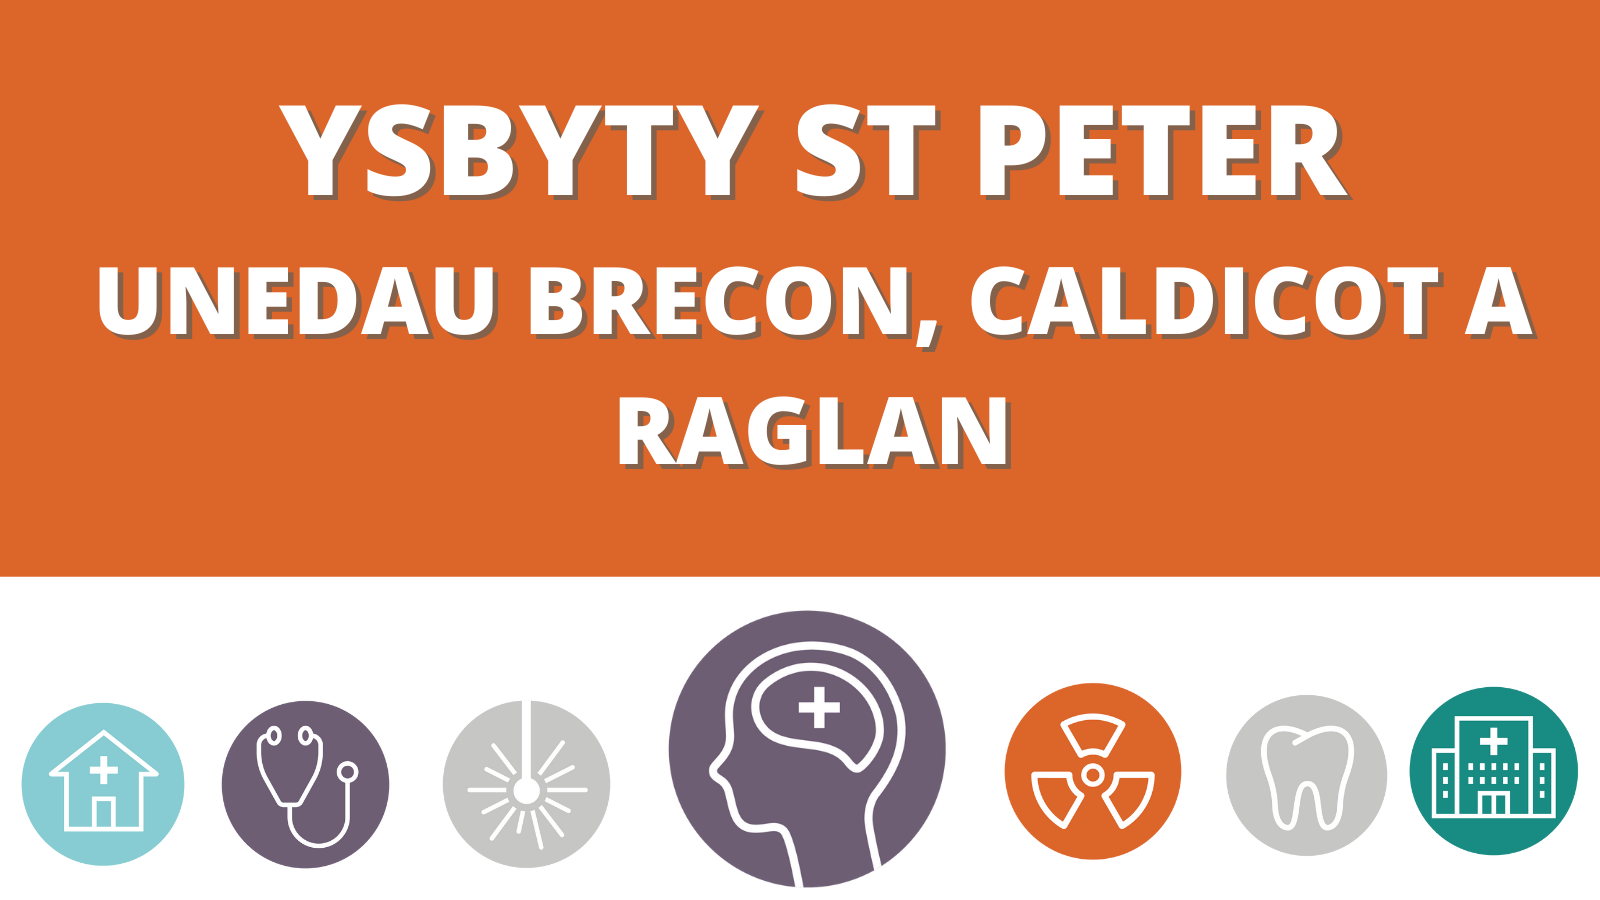 Ysbyty St Peter - Unedau Brecon, Caldicot a Raglan